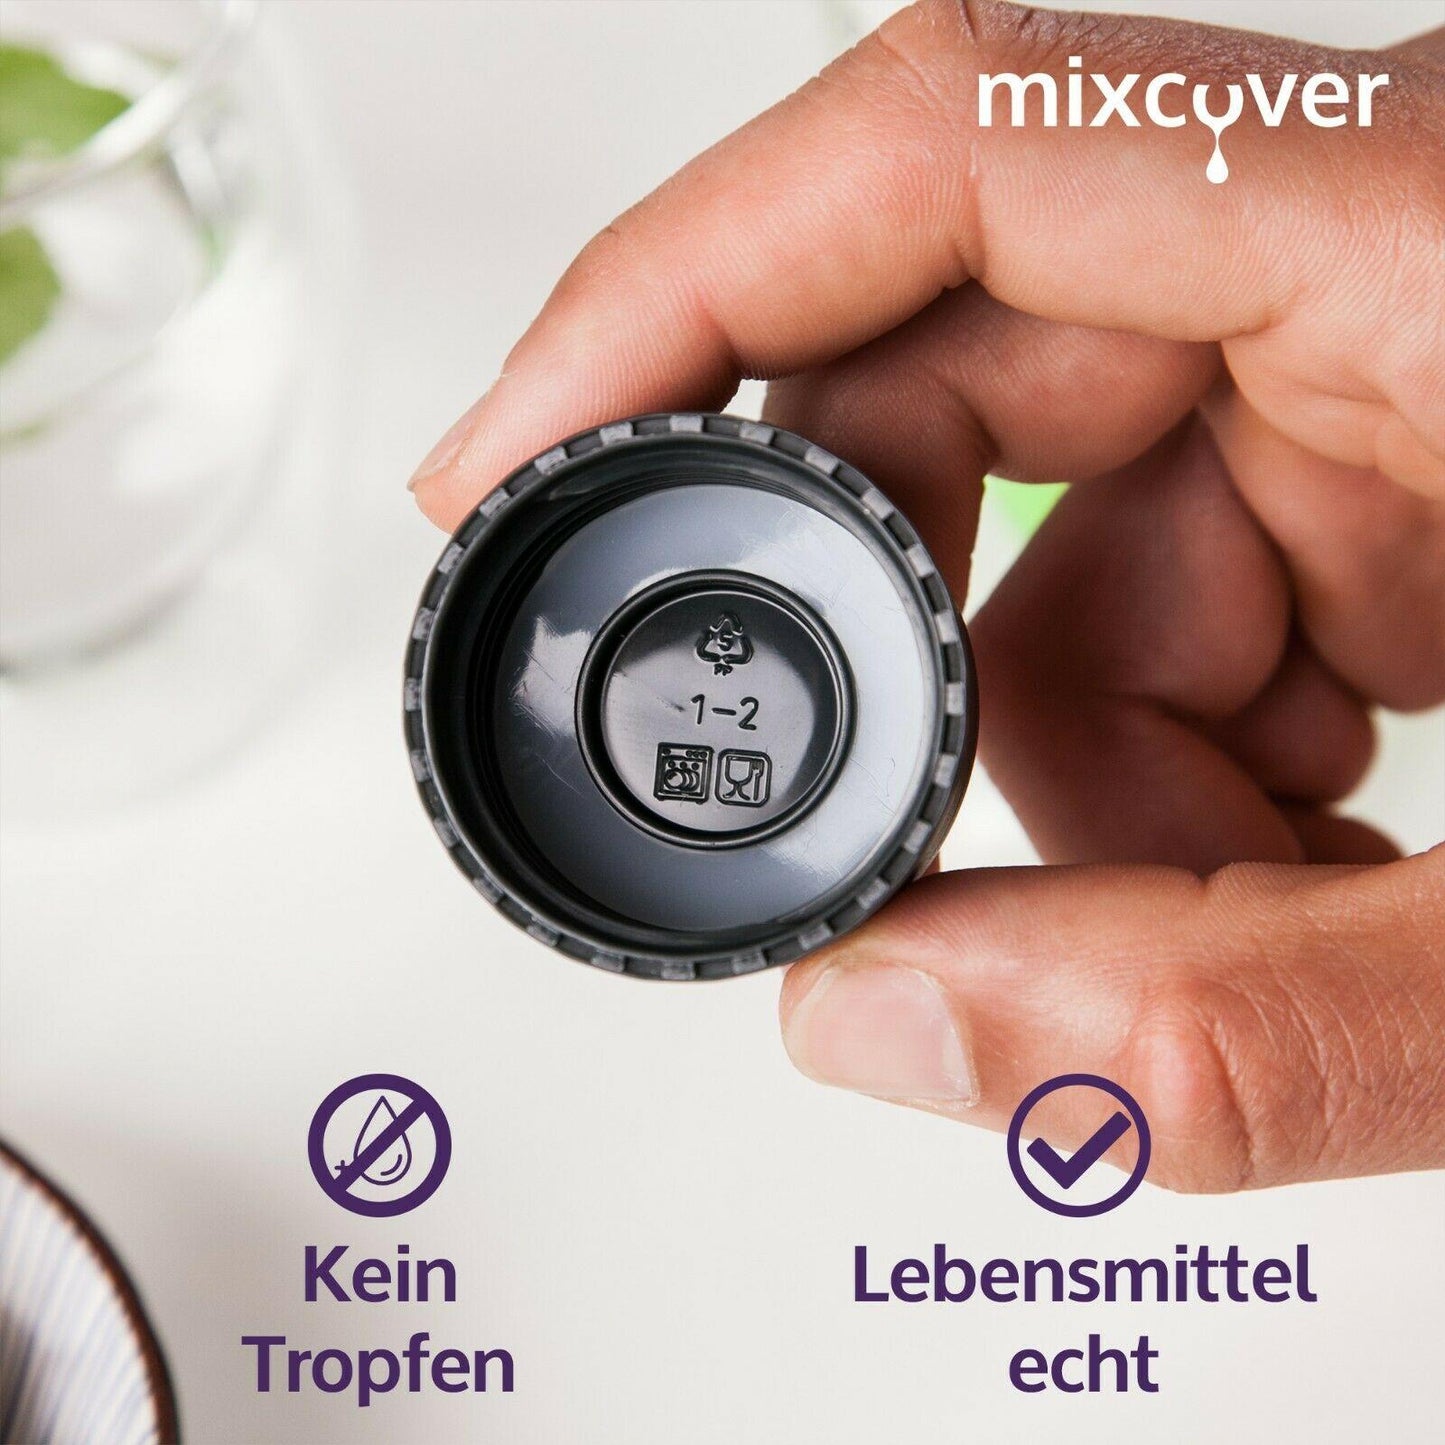 mixcover Ersatzdeckel passend für SodaStream PET Kunstoffflaschen 2er Set - Mixcover - Mixcover